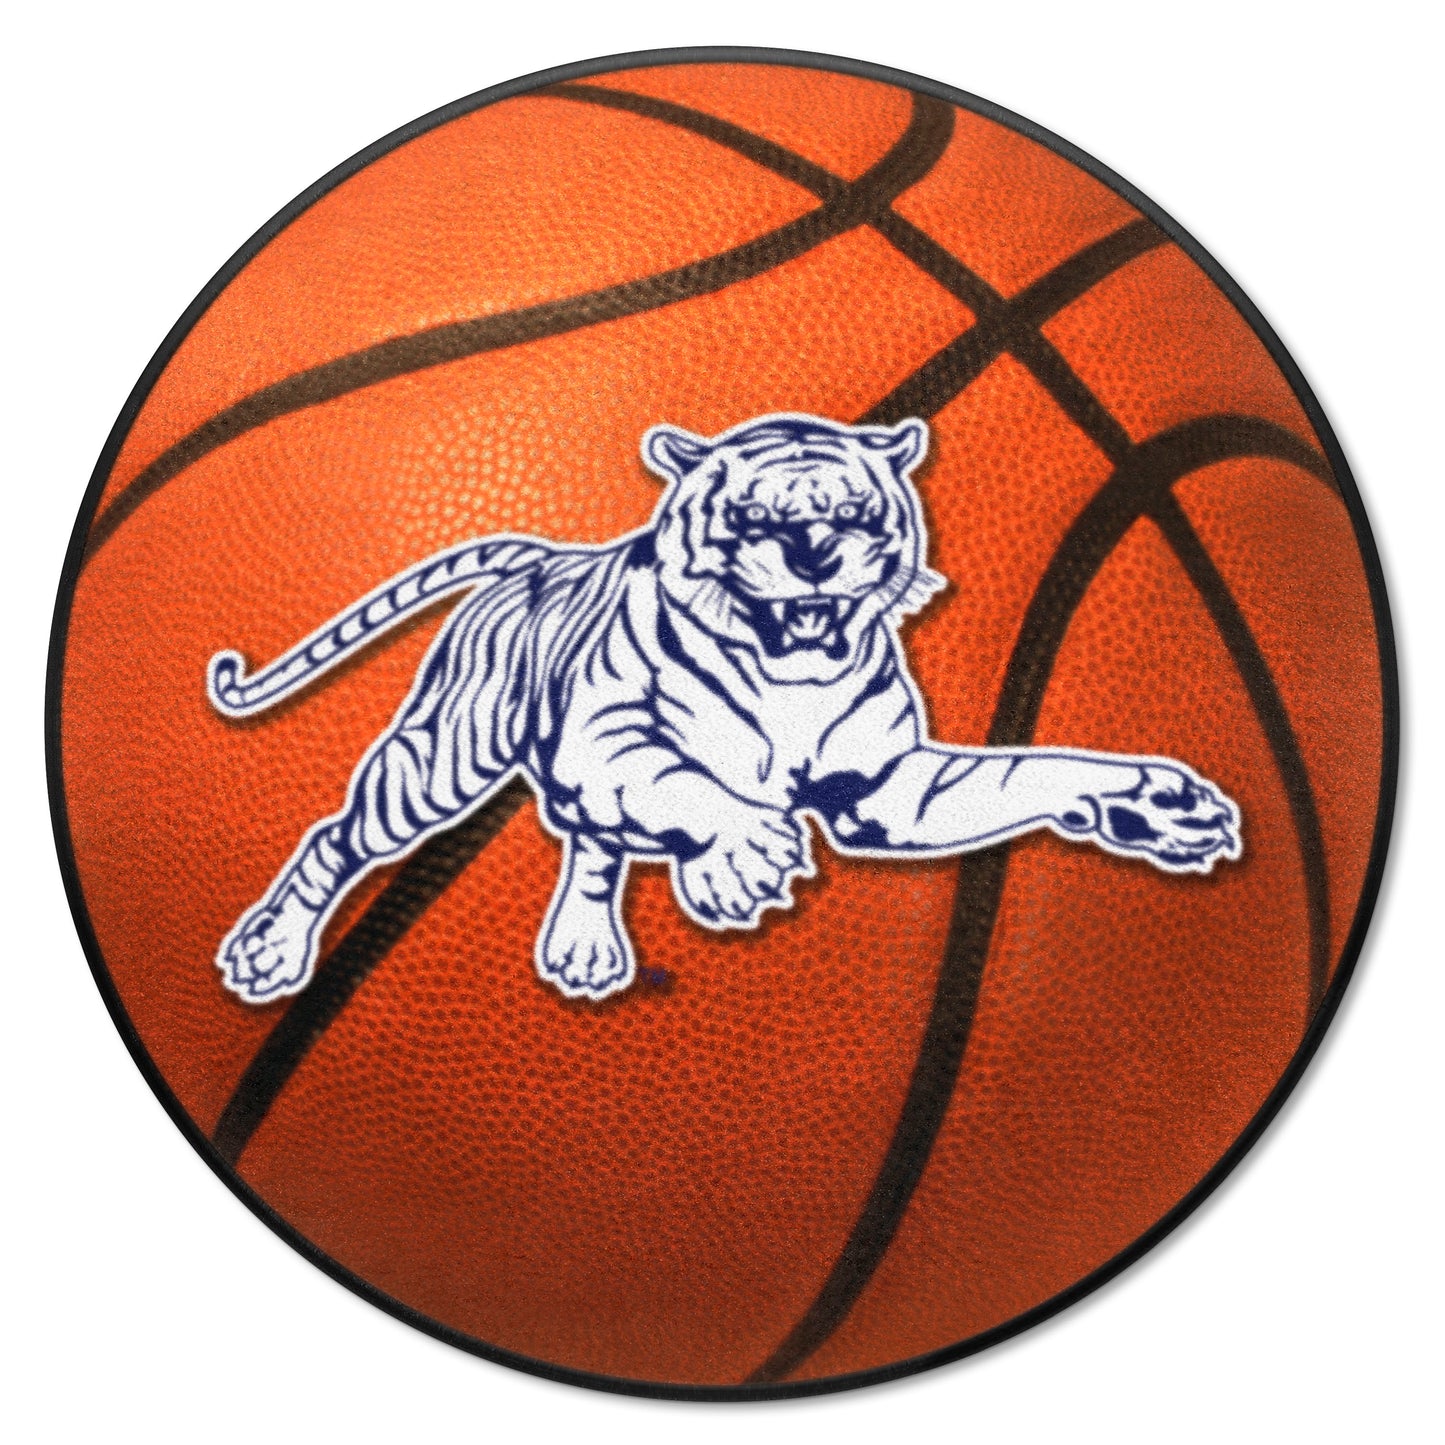 Jackson State Tigers Basketball Rug - 27in. Diameter